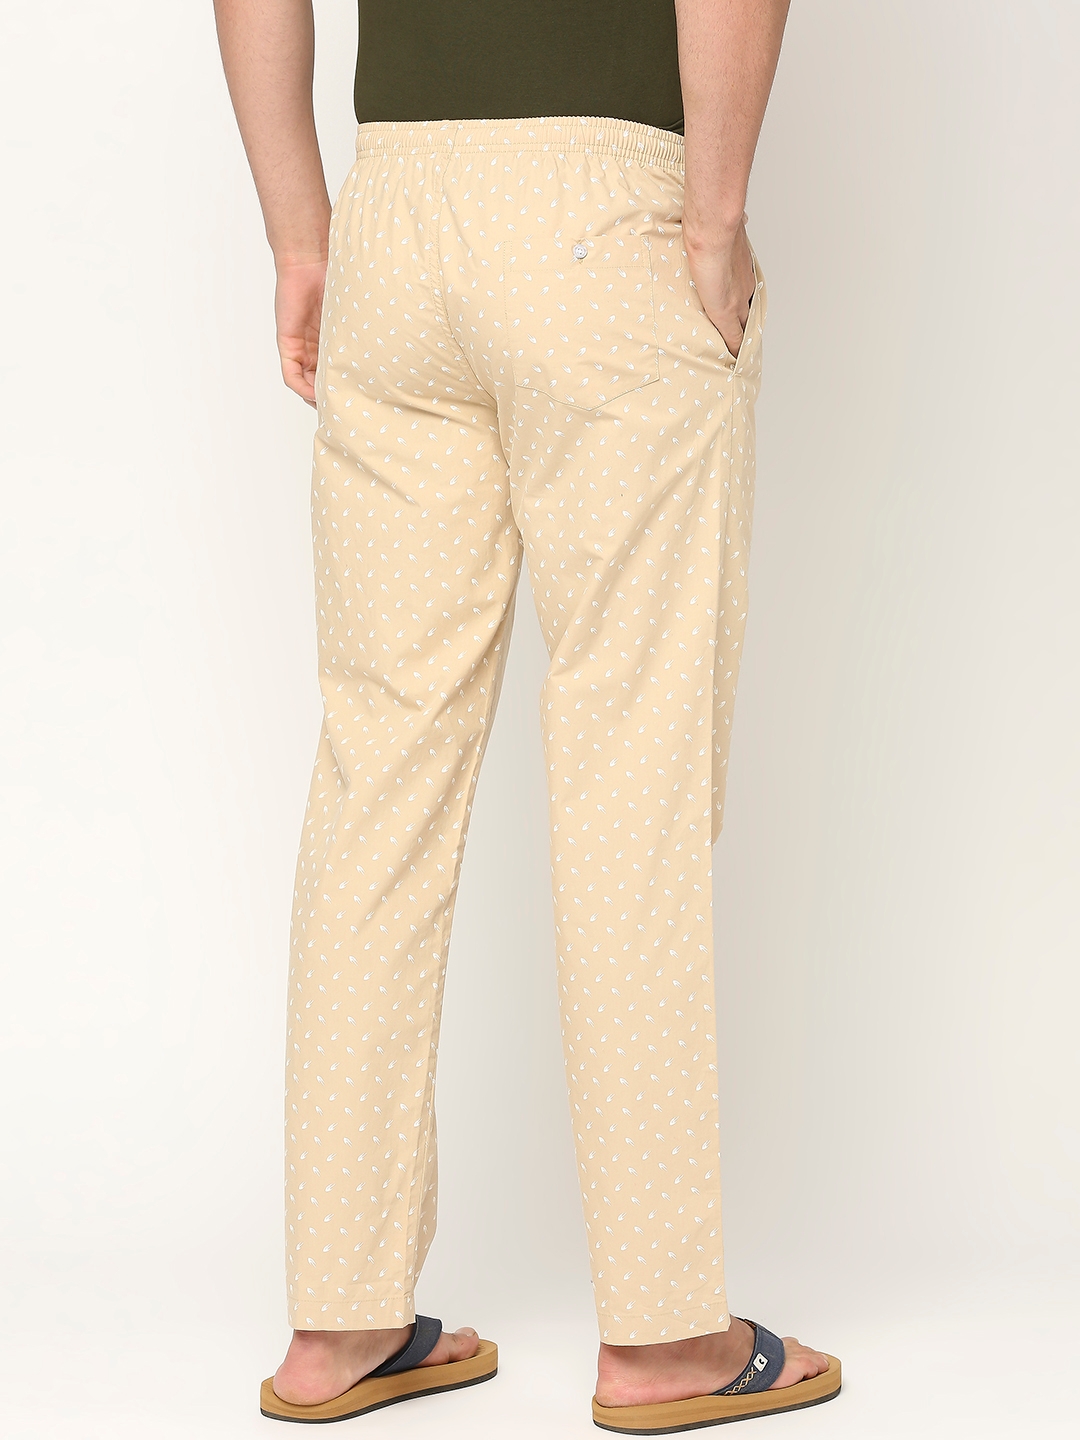 Underjeans by Spykar Premium Cotton Printed Men Beige Pyjama